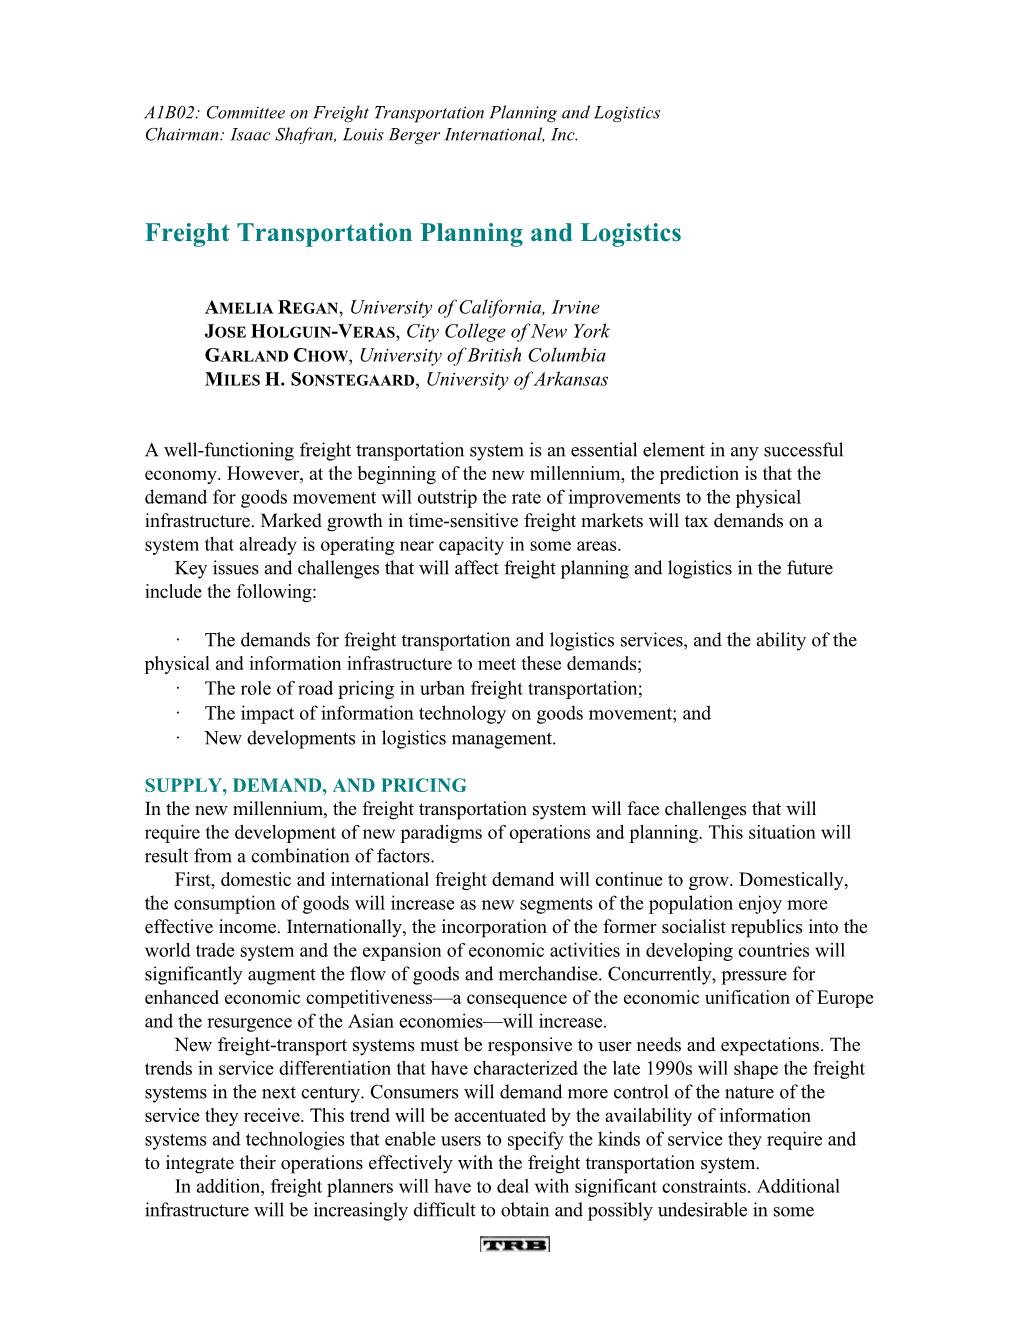 Freight Transportation Planning and Logistics Chairman: Isaac Shafran, Louis Berger International, Inc